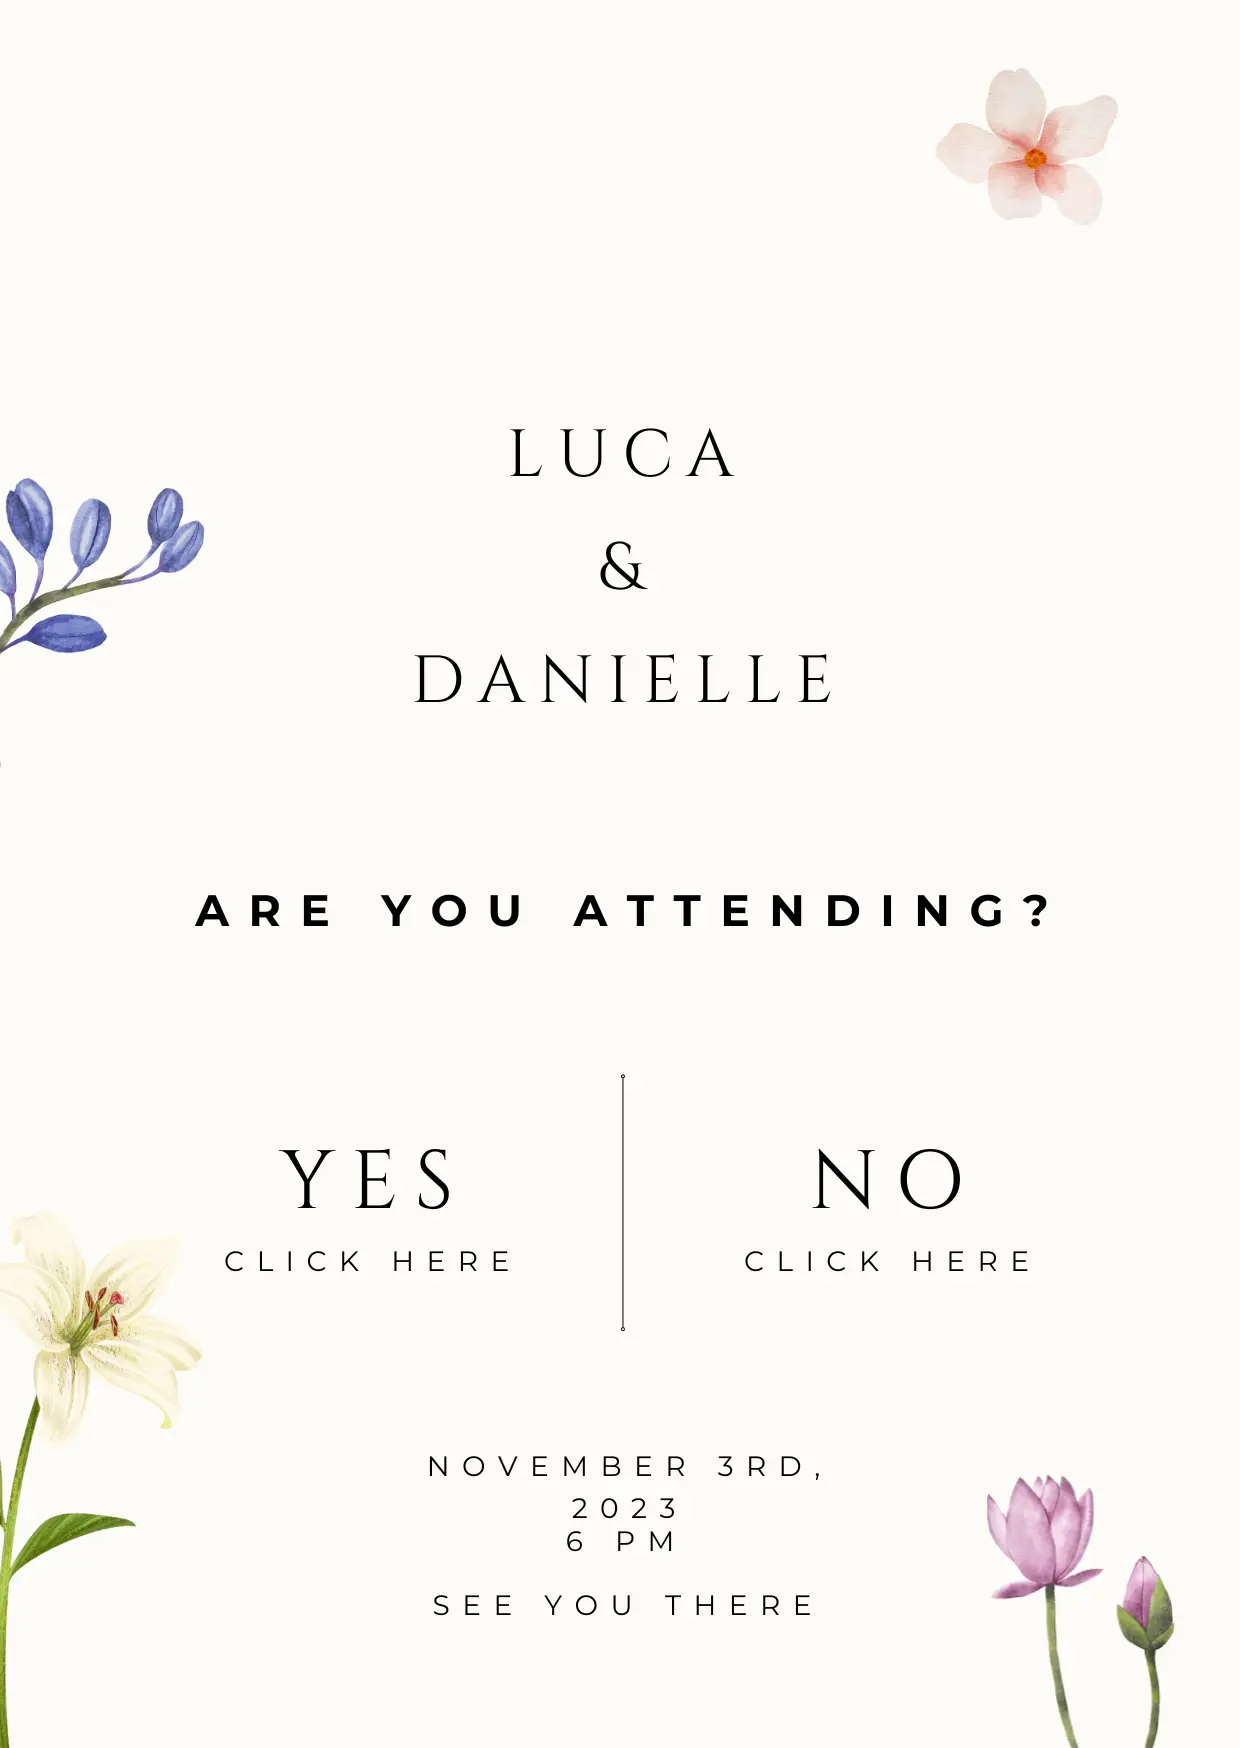 Digital wedding invitations